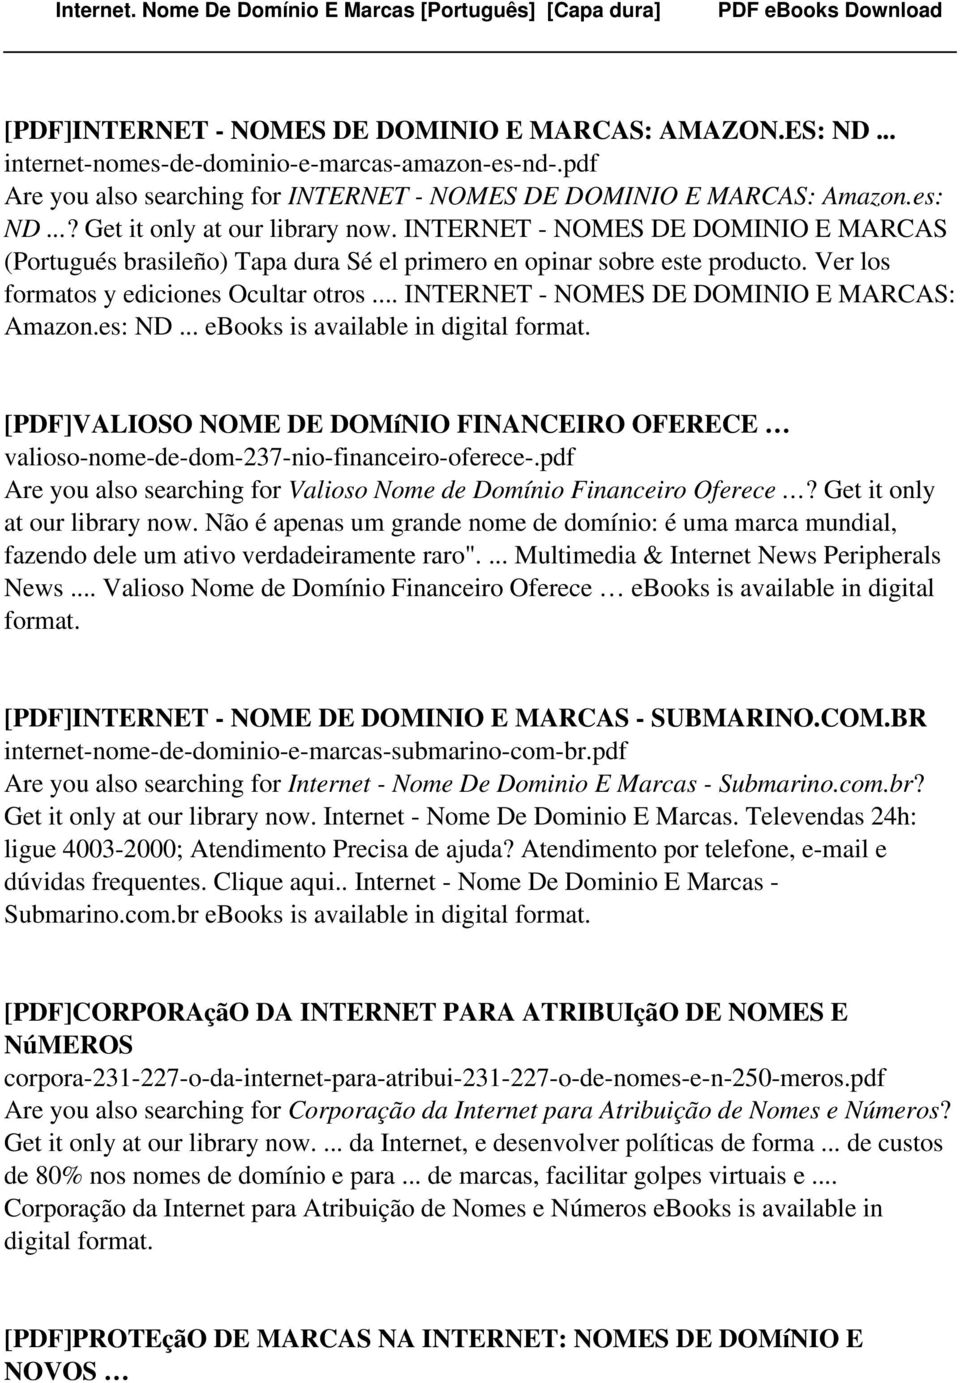 .. INTERNET - NOMES DE DOMINIO E MARCAS: Amazon.es: ND... ebooks is available in [PDF]VALIOSO NOME DE DOMíNIO FINANCEIRO OFERECE valioso-nome-de-dom-237-nio-financeiro-oferece-.